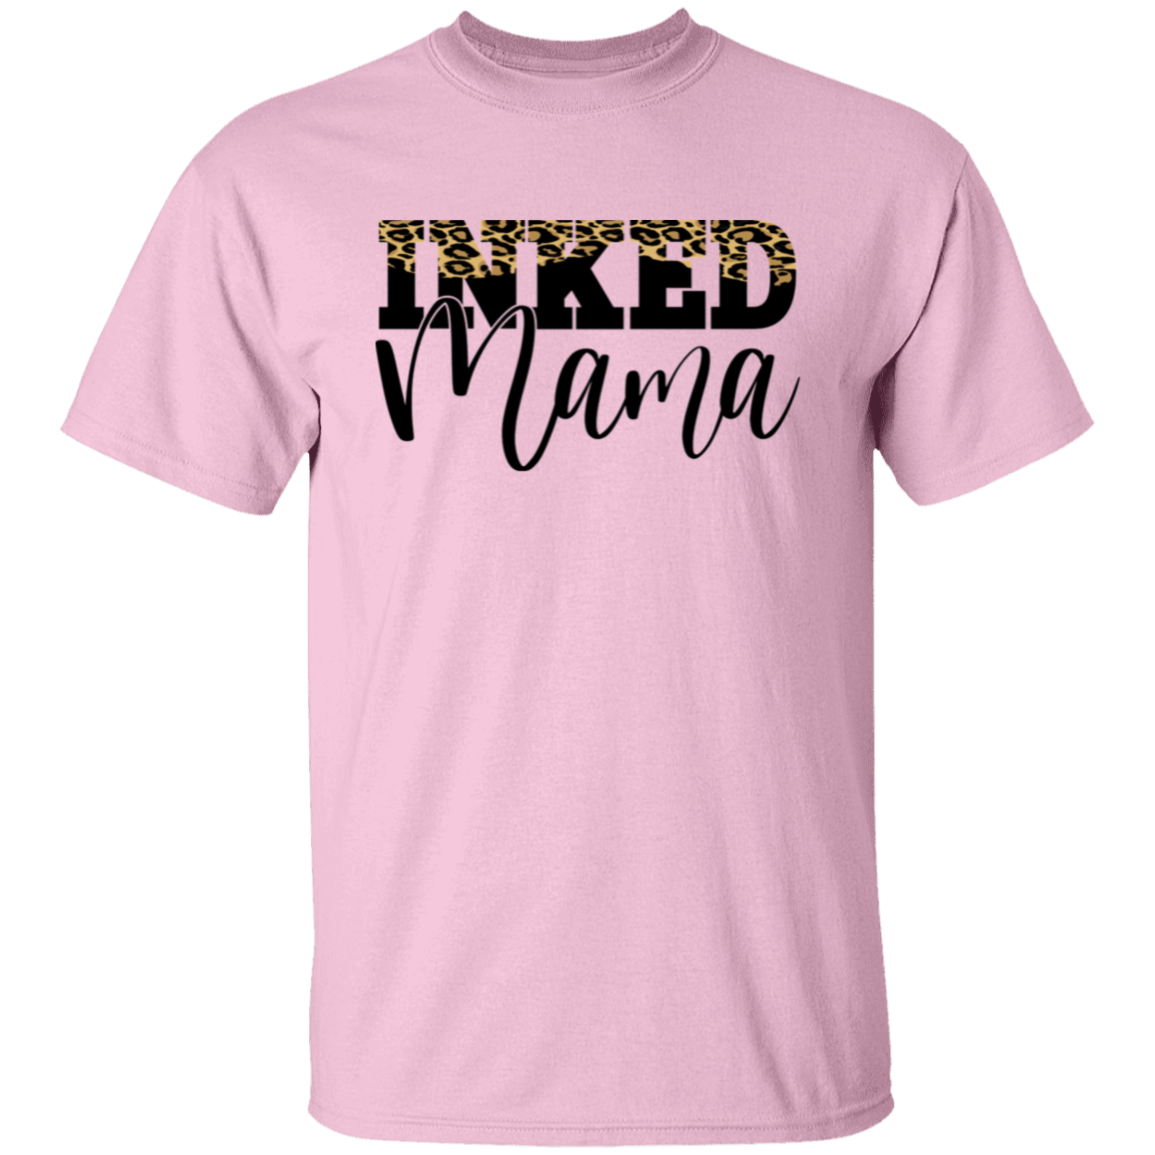 Inked Mama T-Shirt